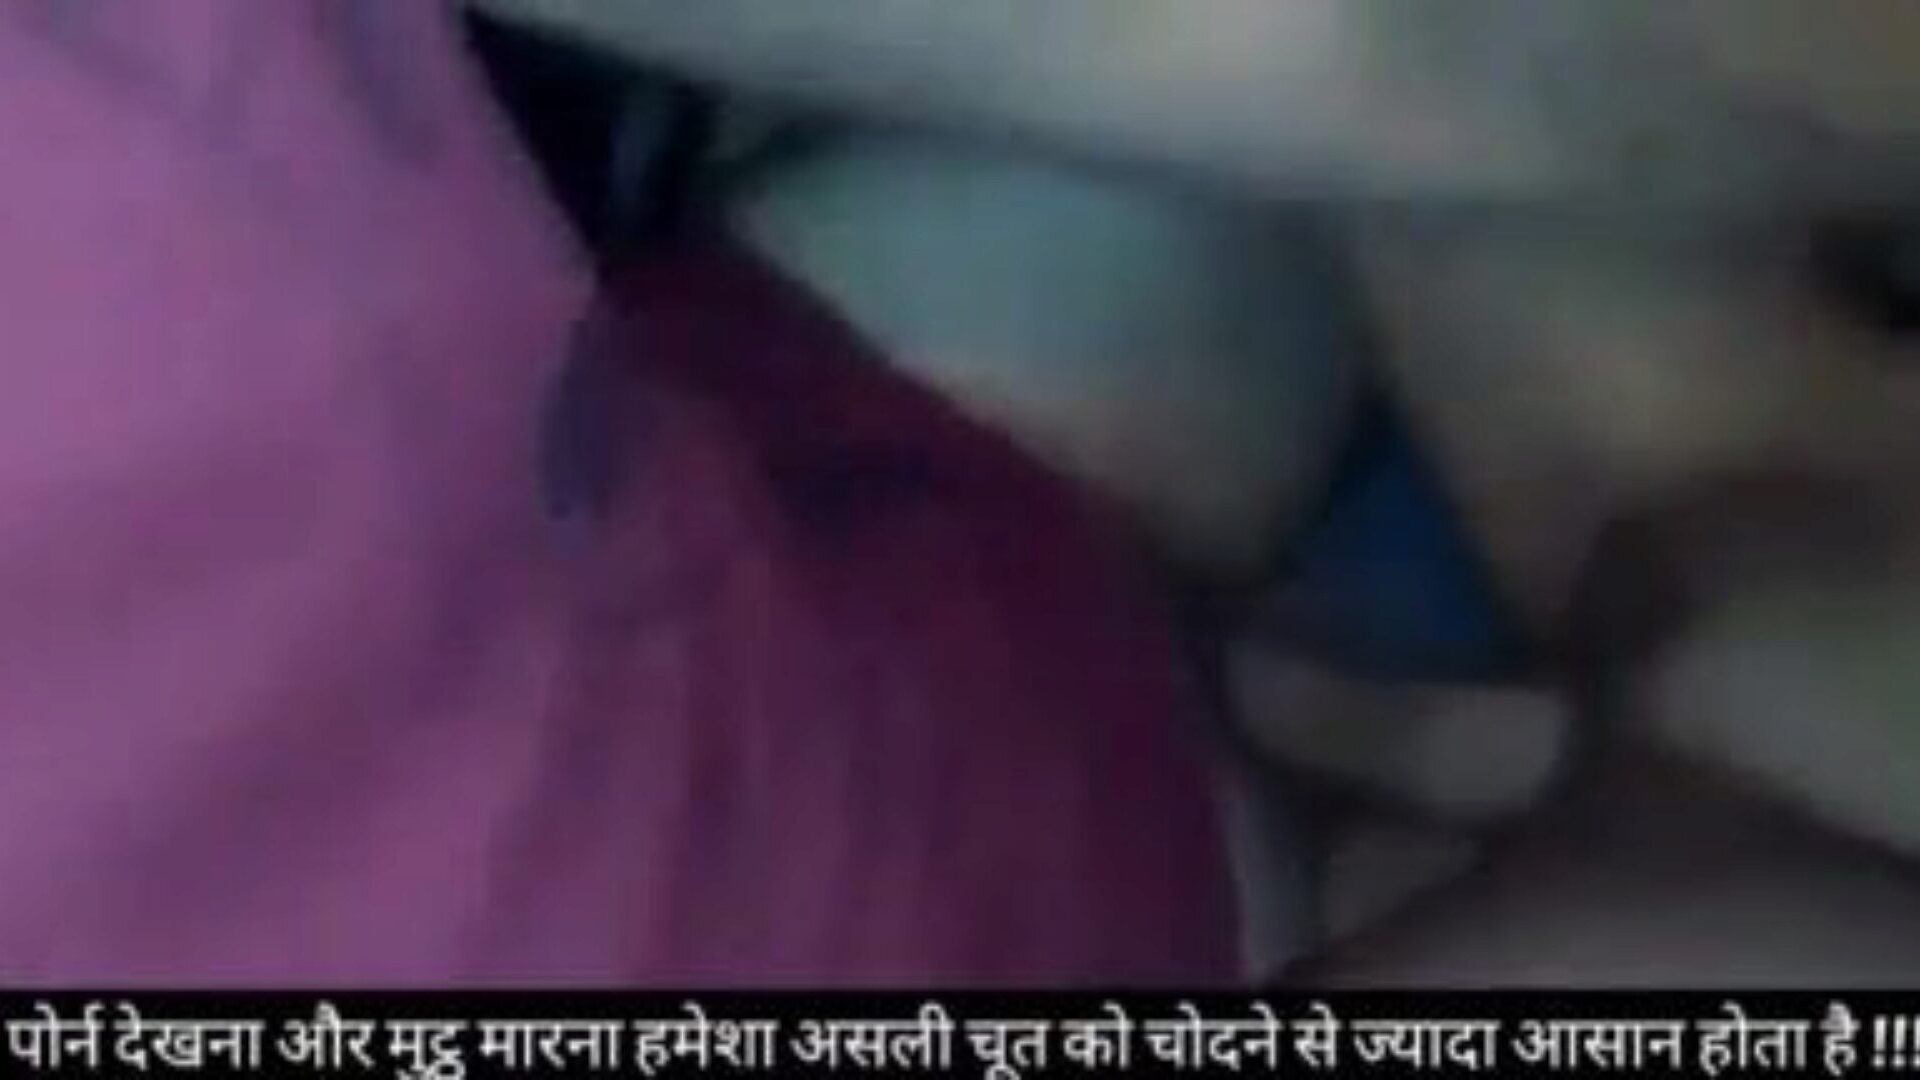 indiai tiktok girl miss pooja újonnan kiszivárgott videó: pornó 10 nézni indiai tiktok girl miss pooja újonnan kiszivárgott videó epizódot a xhamsteren